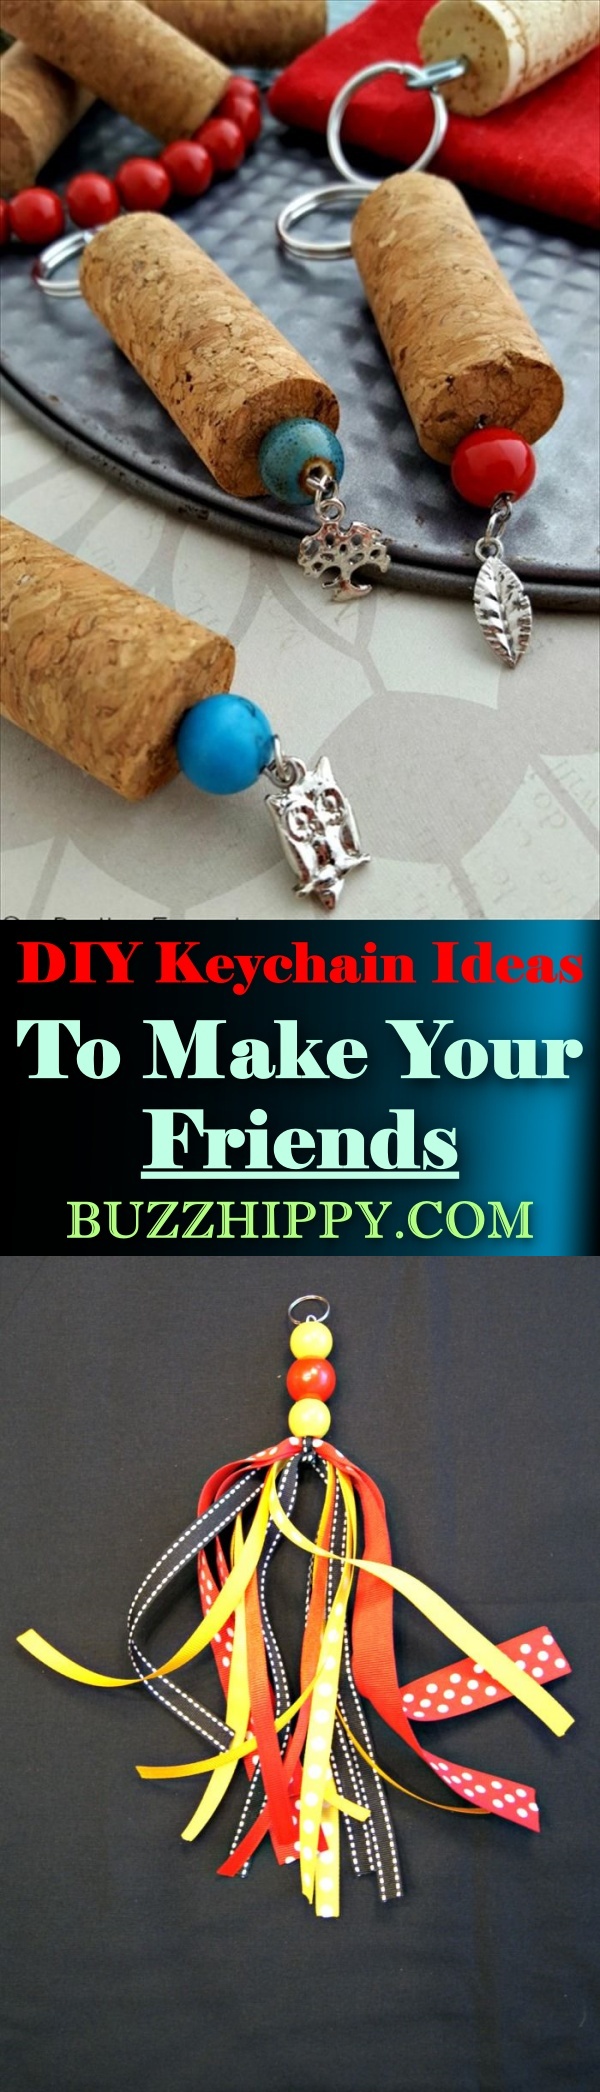 DIY Keychain Ideas To Make Your Friends